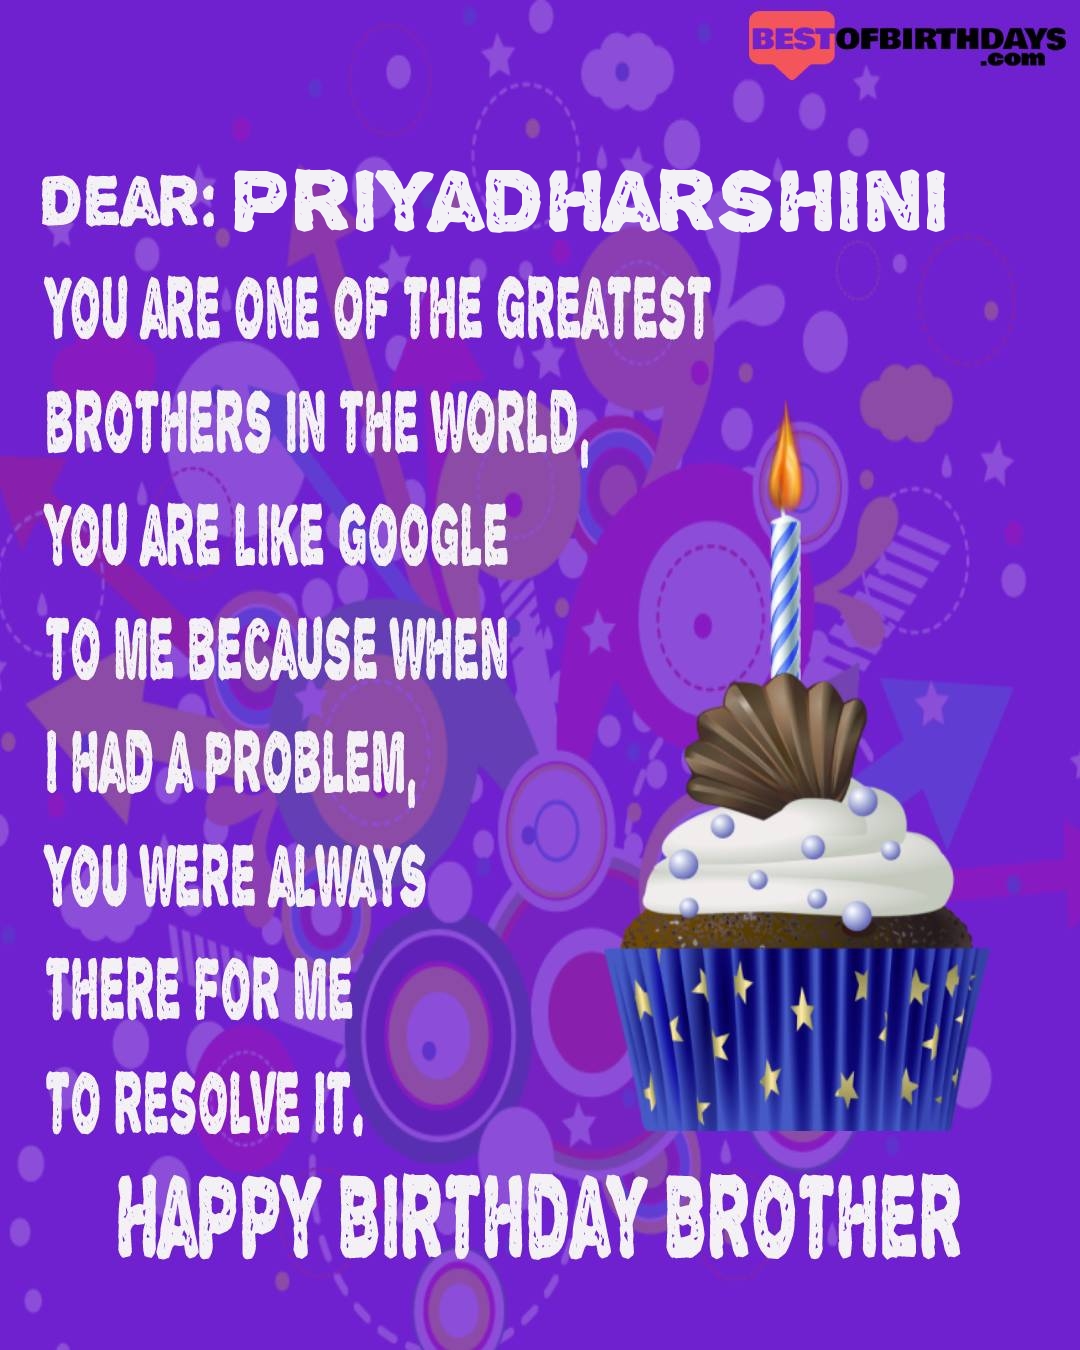 Happy birthday priyadharshini bhai brother bro